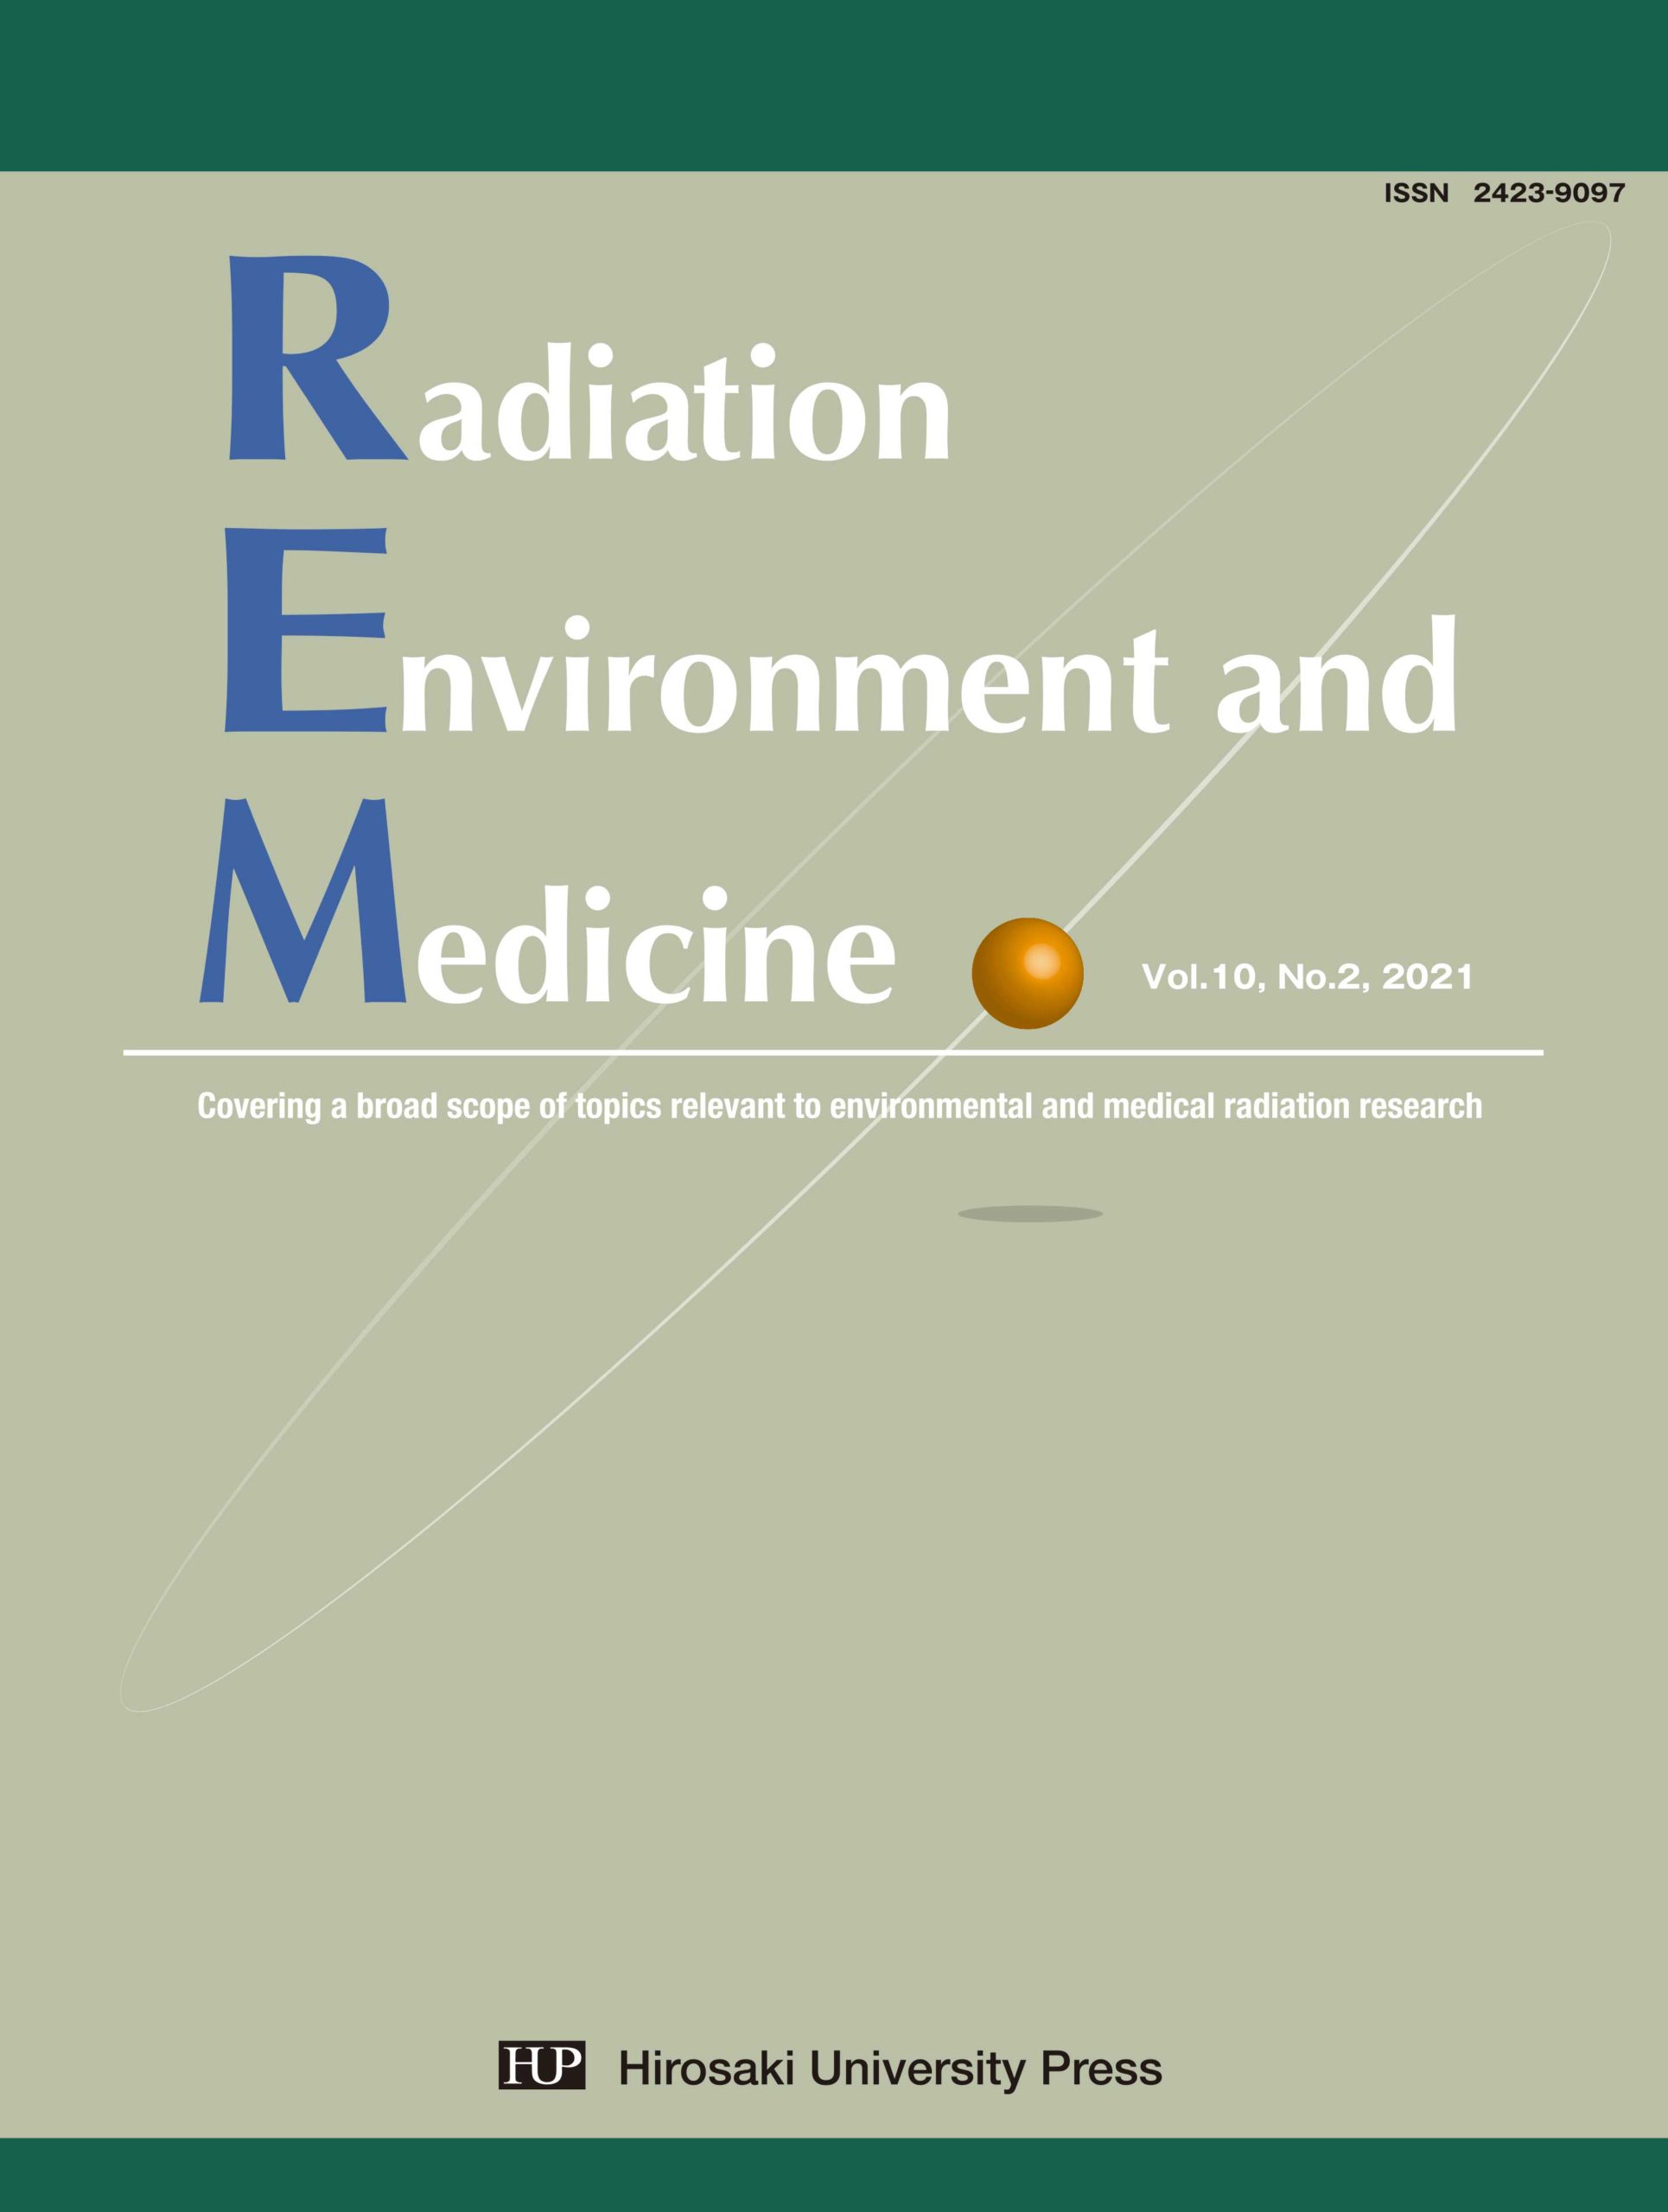 Radiation Environment and Medicine Vol.10, No.2 cover